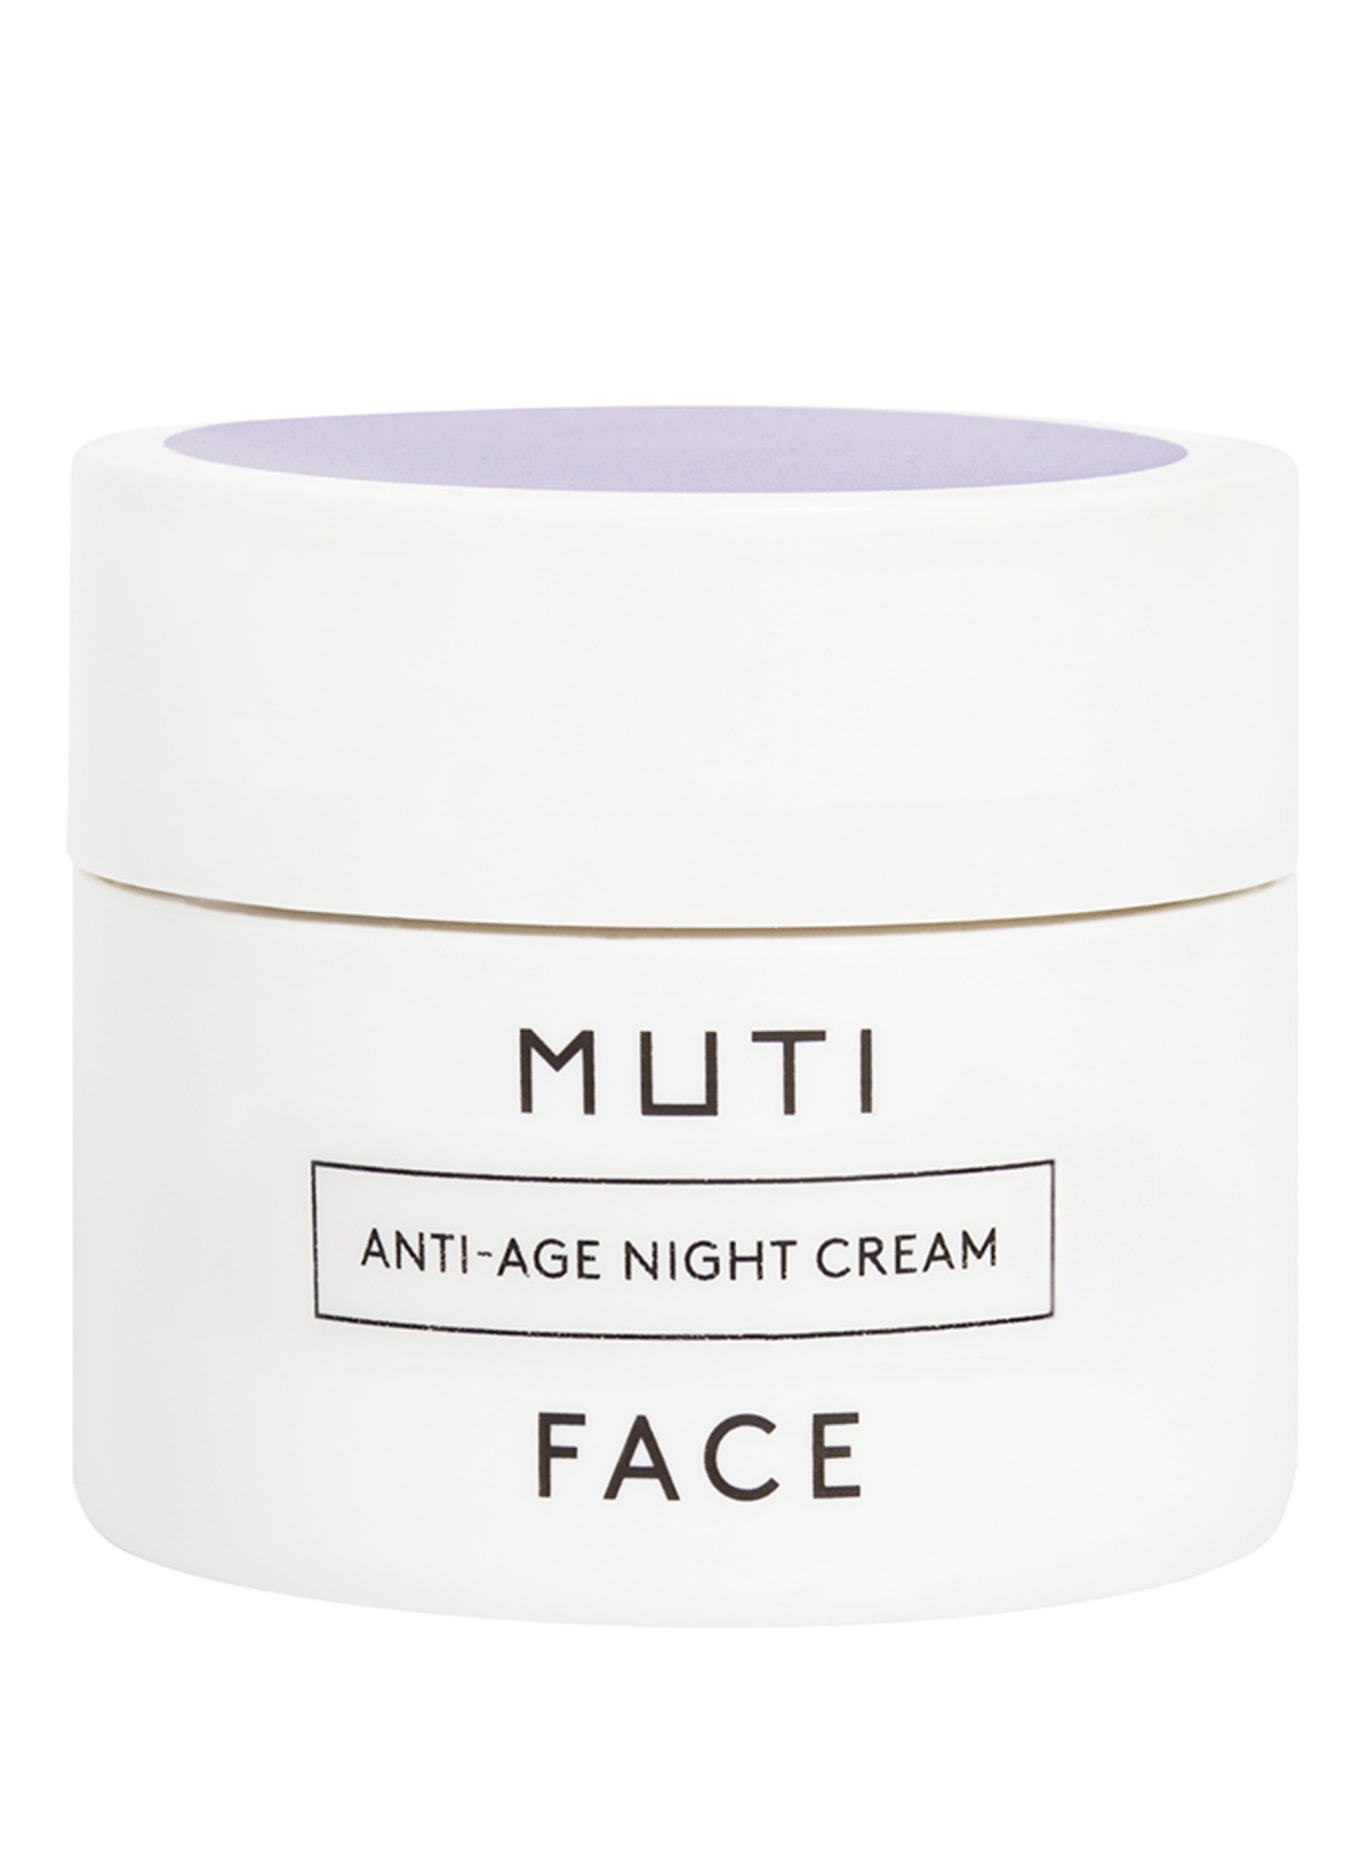 MUTI ANTI-AGE NIGHT CREAM (Bild 1)